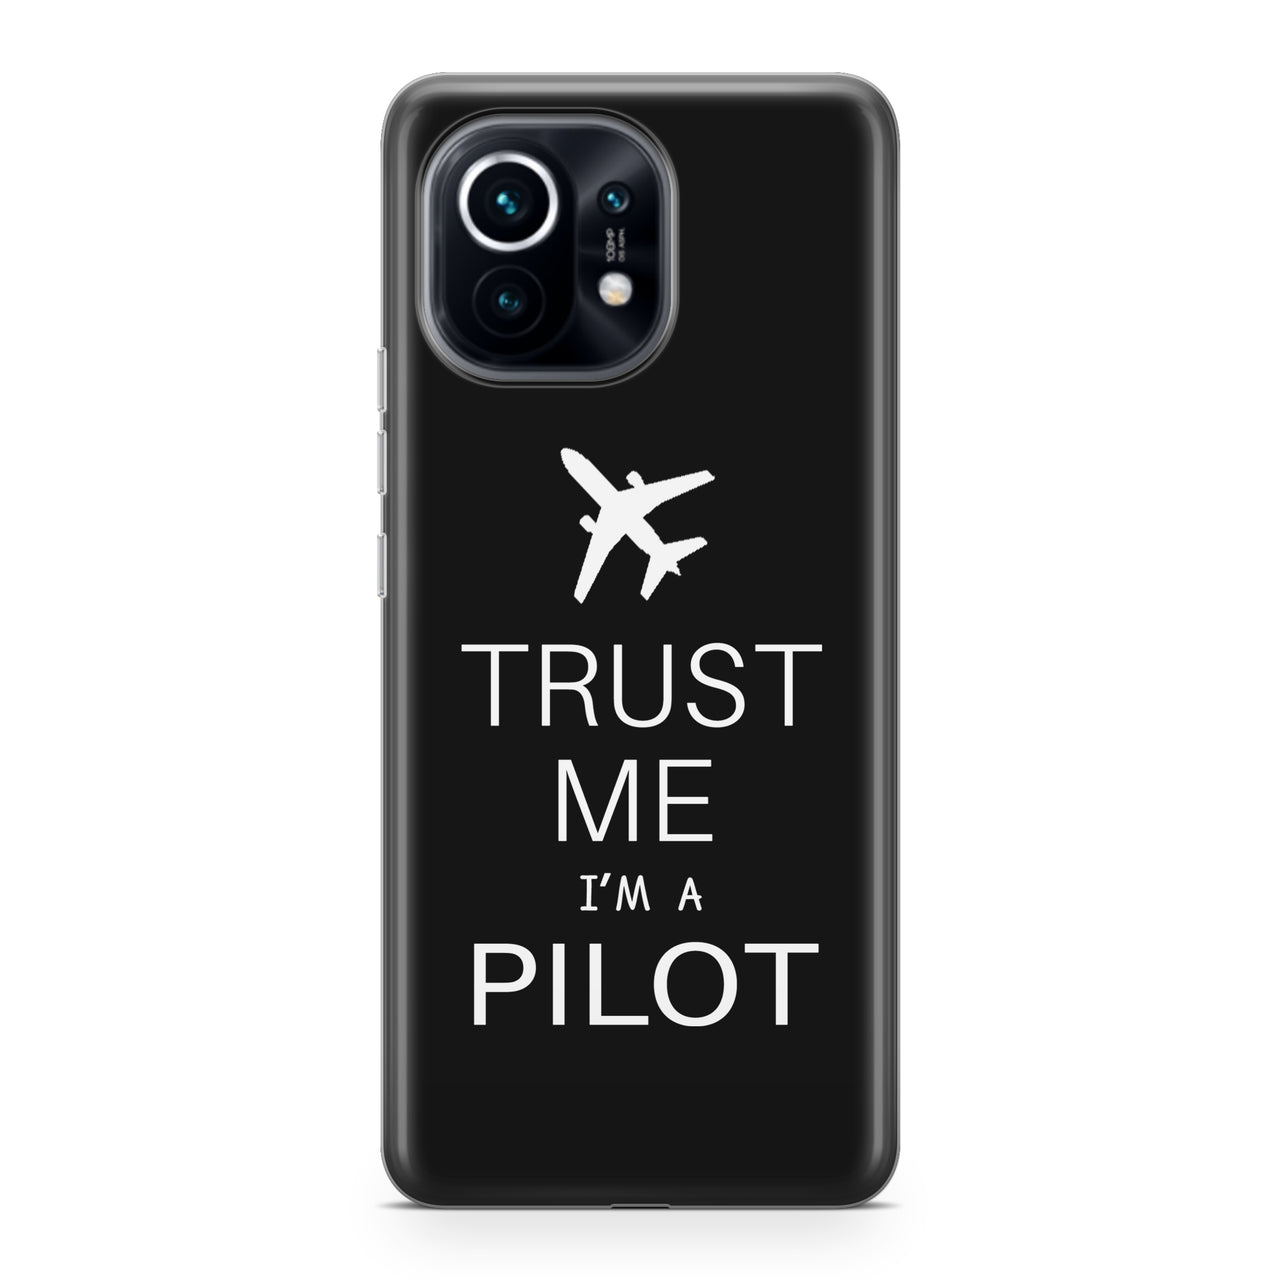 Trust Me I'm a Pilot 2 Designed Xiaomi Cases